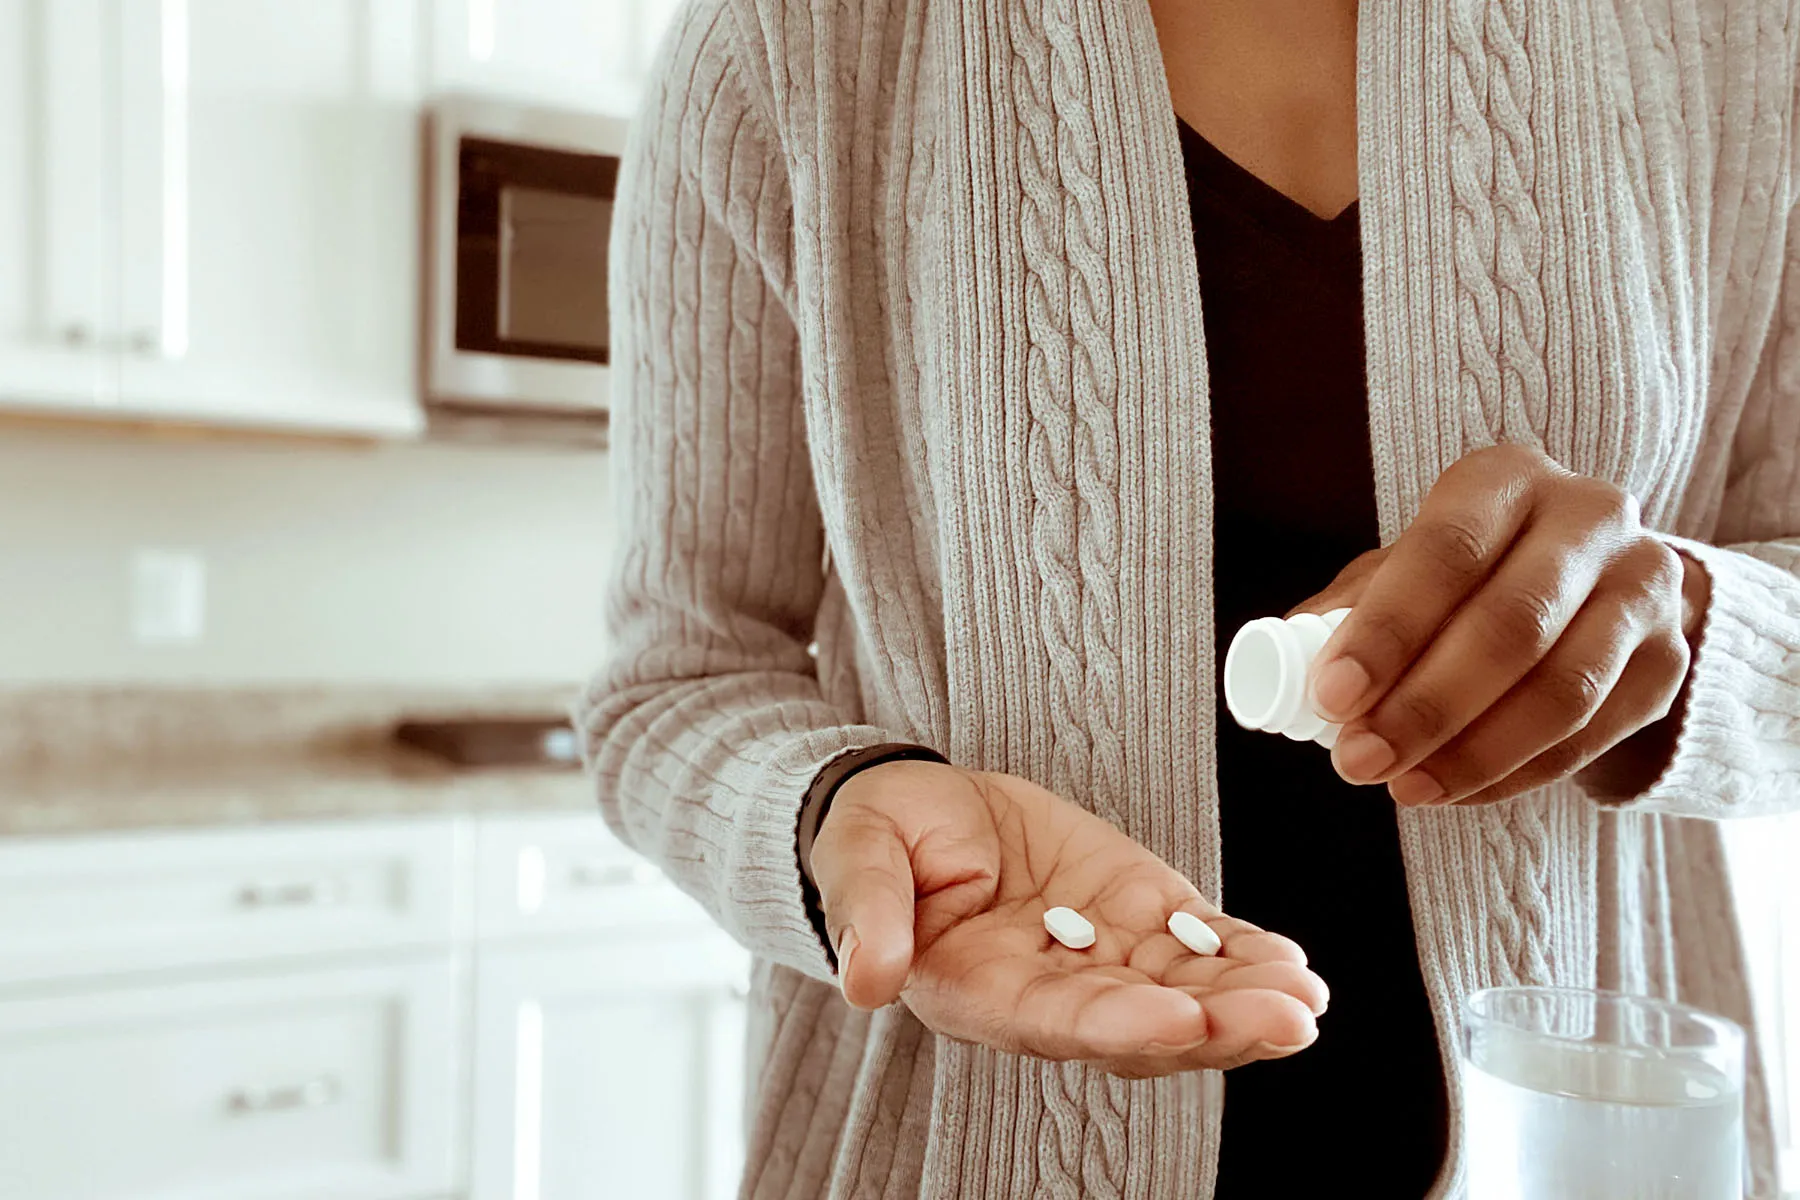 America's Love Affair With Sleeping Pills May Be Waning